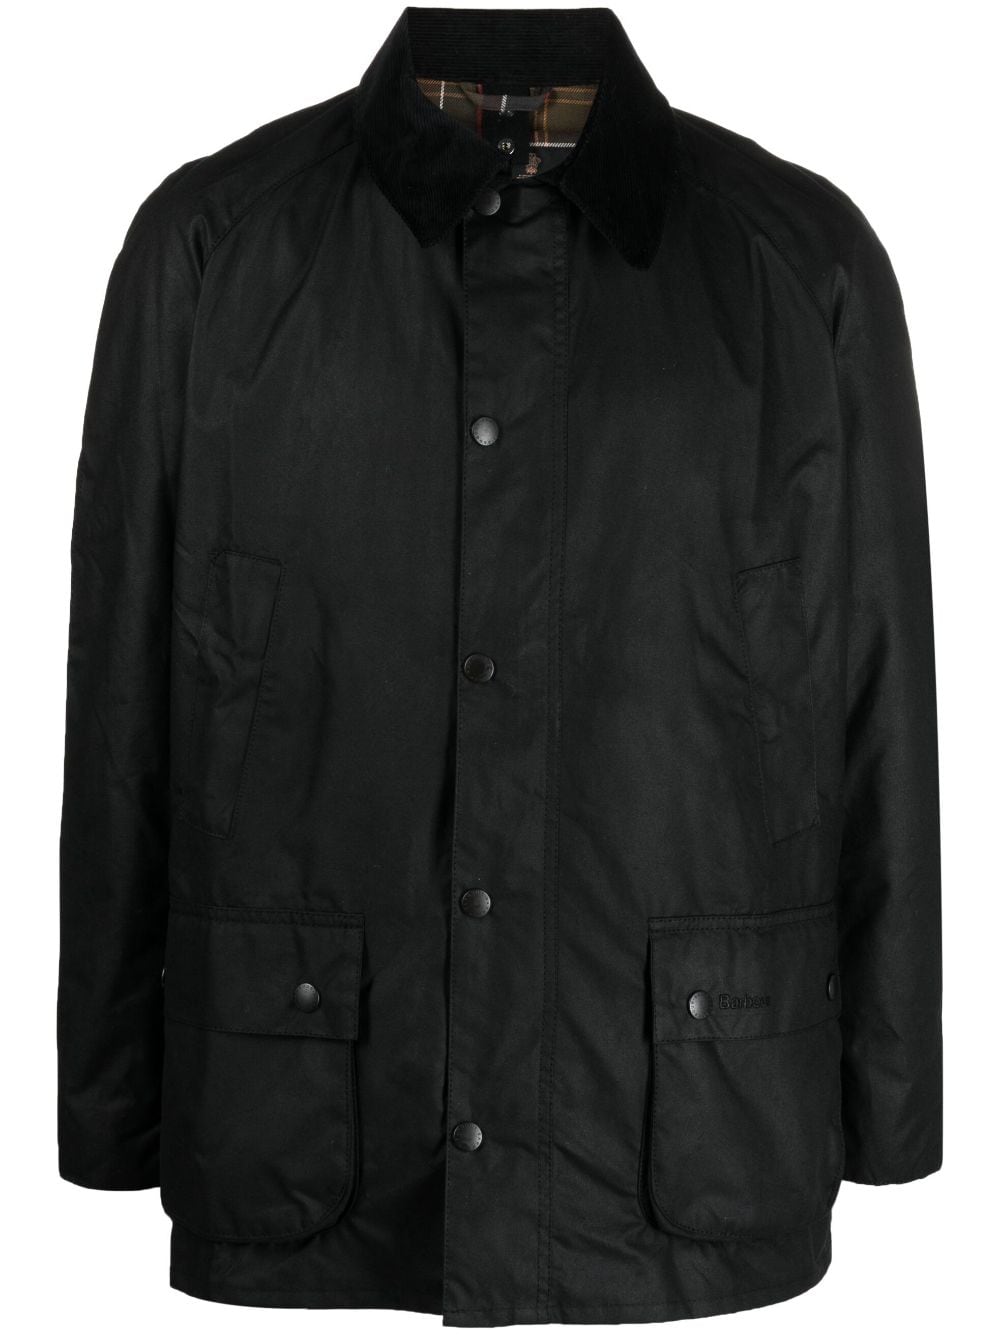 Barbour collared wax jacket - Black von Barbour